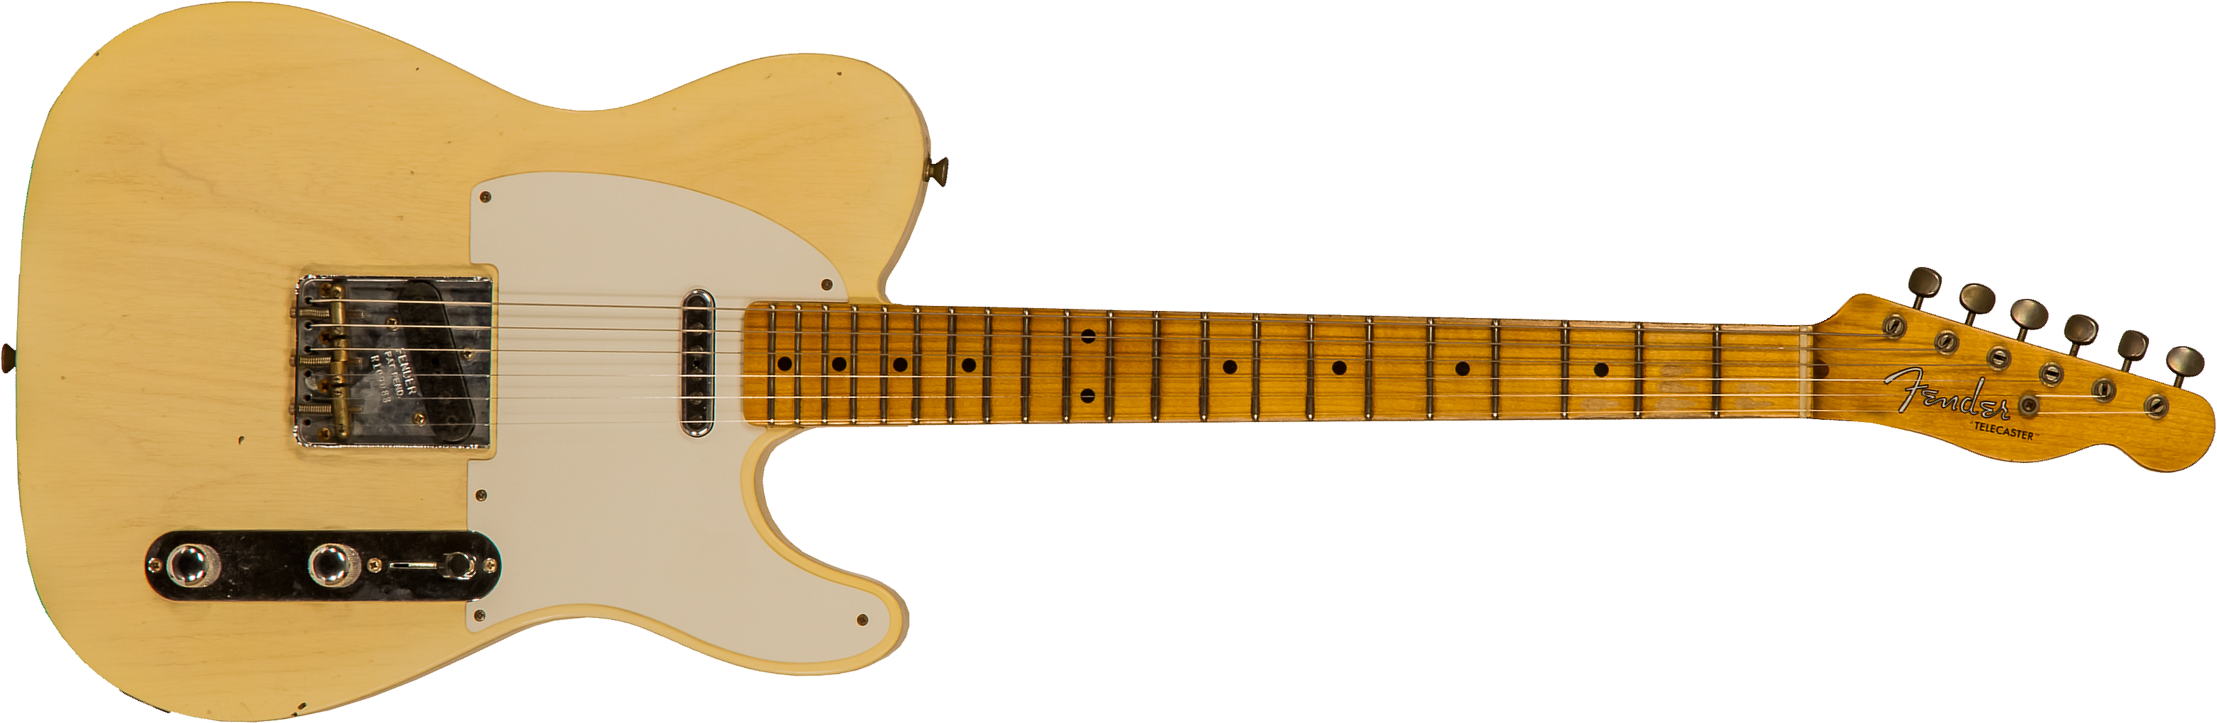 Fender Custom Shop Tele Tomatillo Ltd 2s Ht Mn #r109088 - Journeyman Relic Natural Blonde - Guitarra eléctrica con forma de tel - Main picture